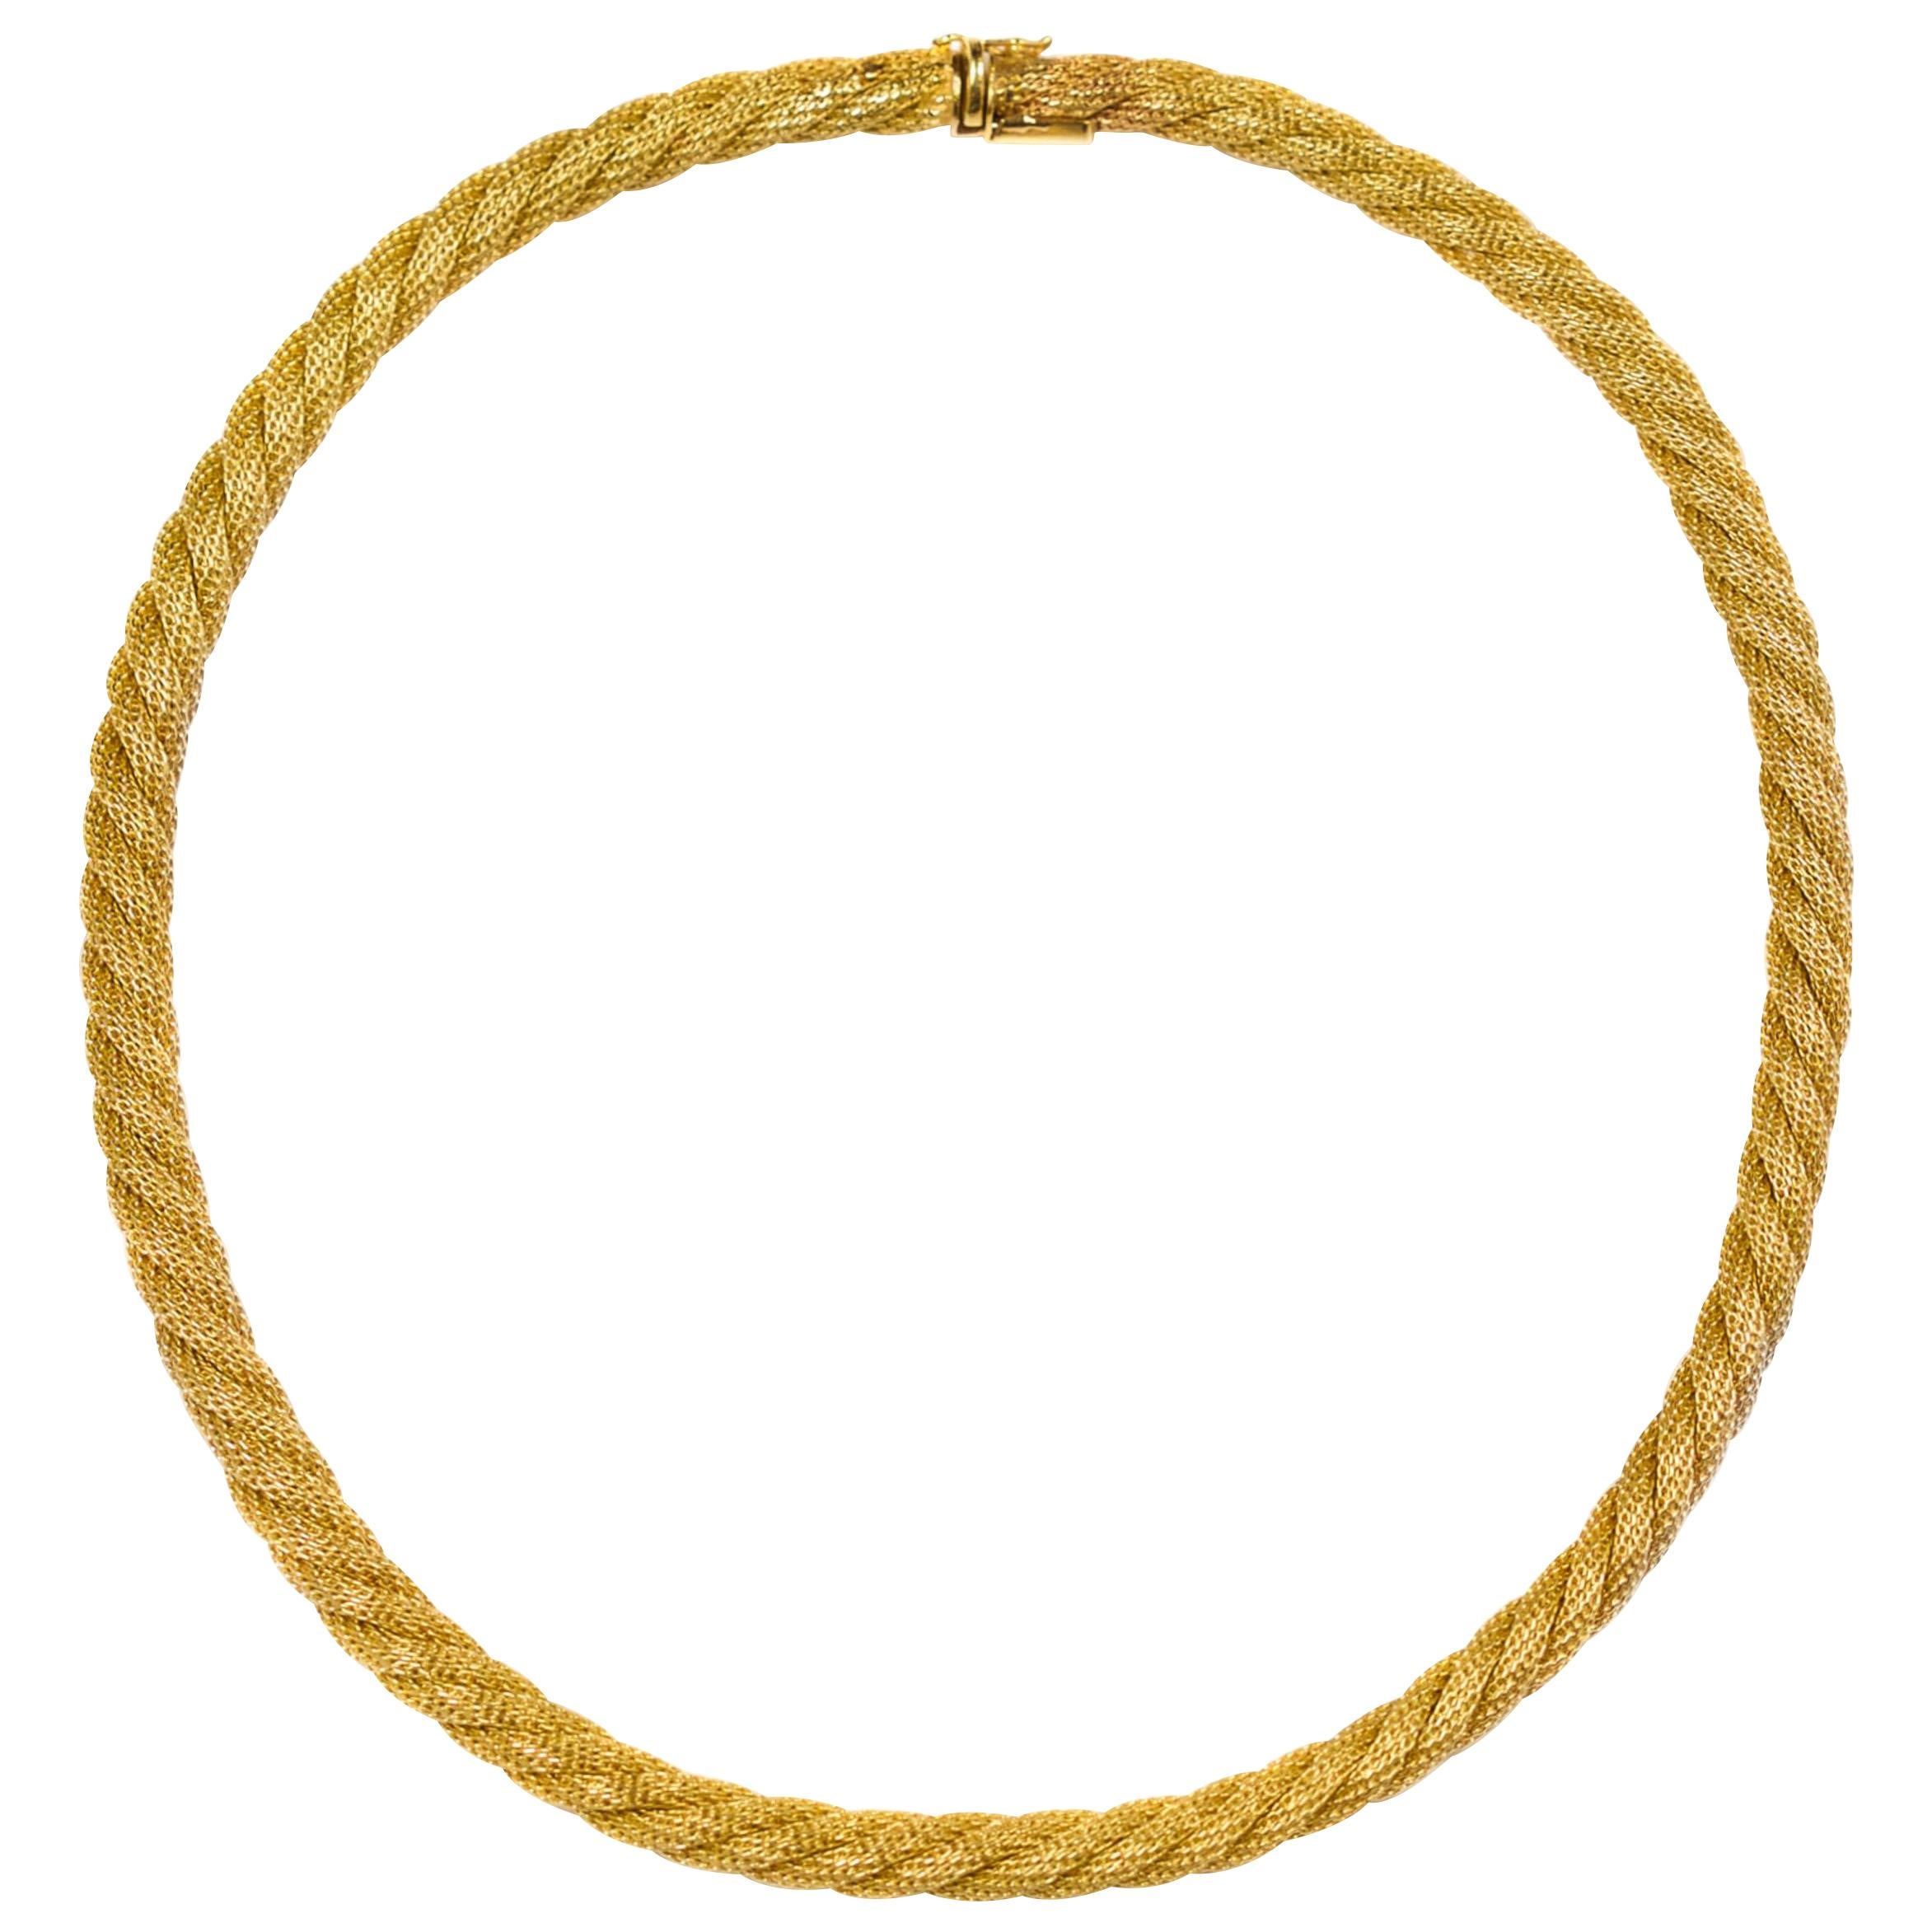 Vintage Italian 14k Yellow Gold Mesh Choker Necklace